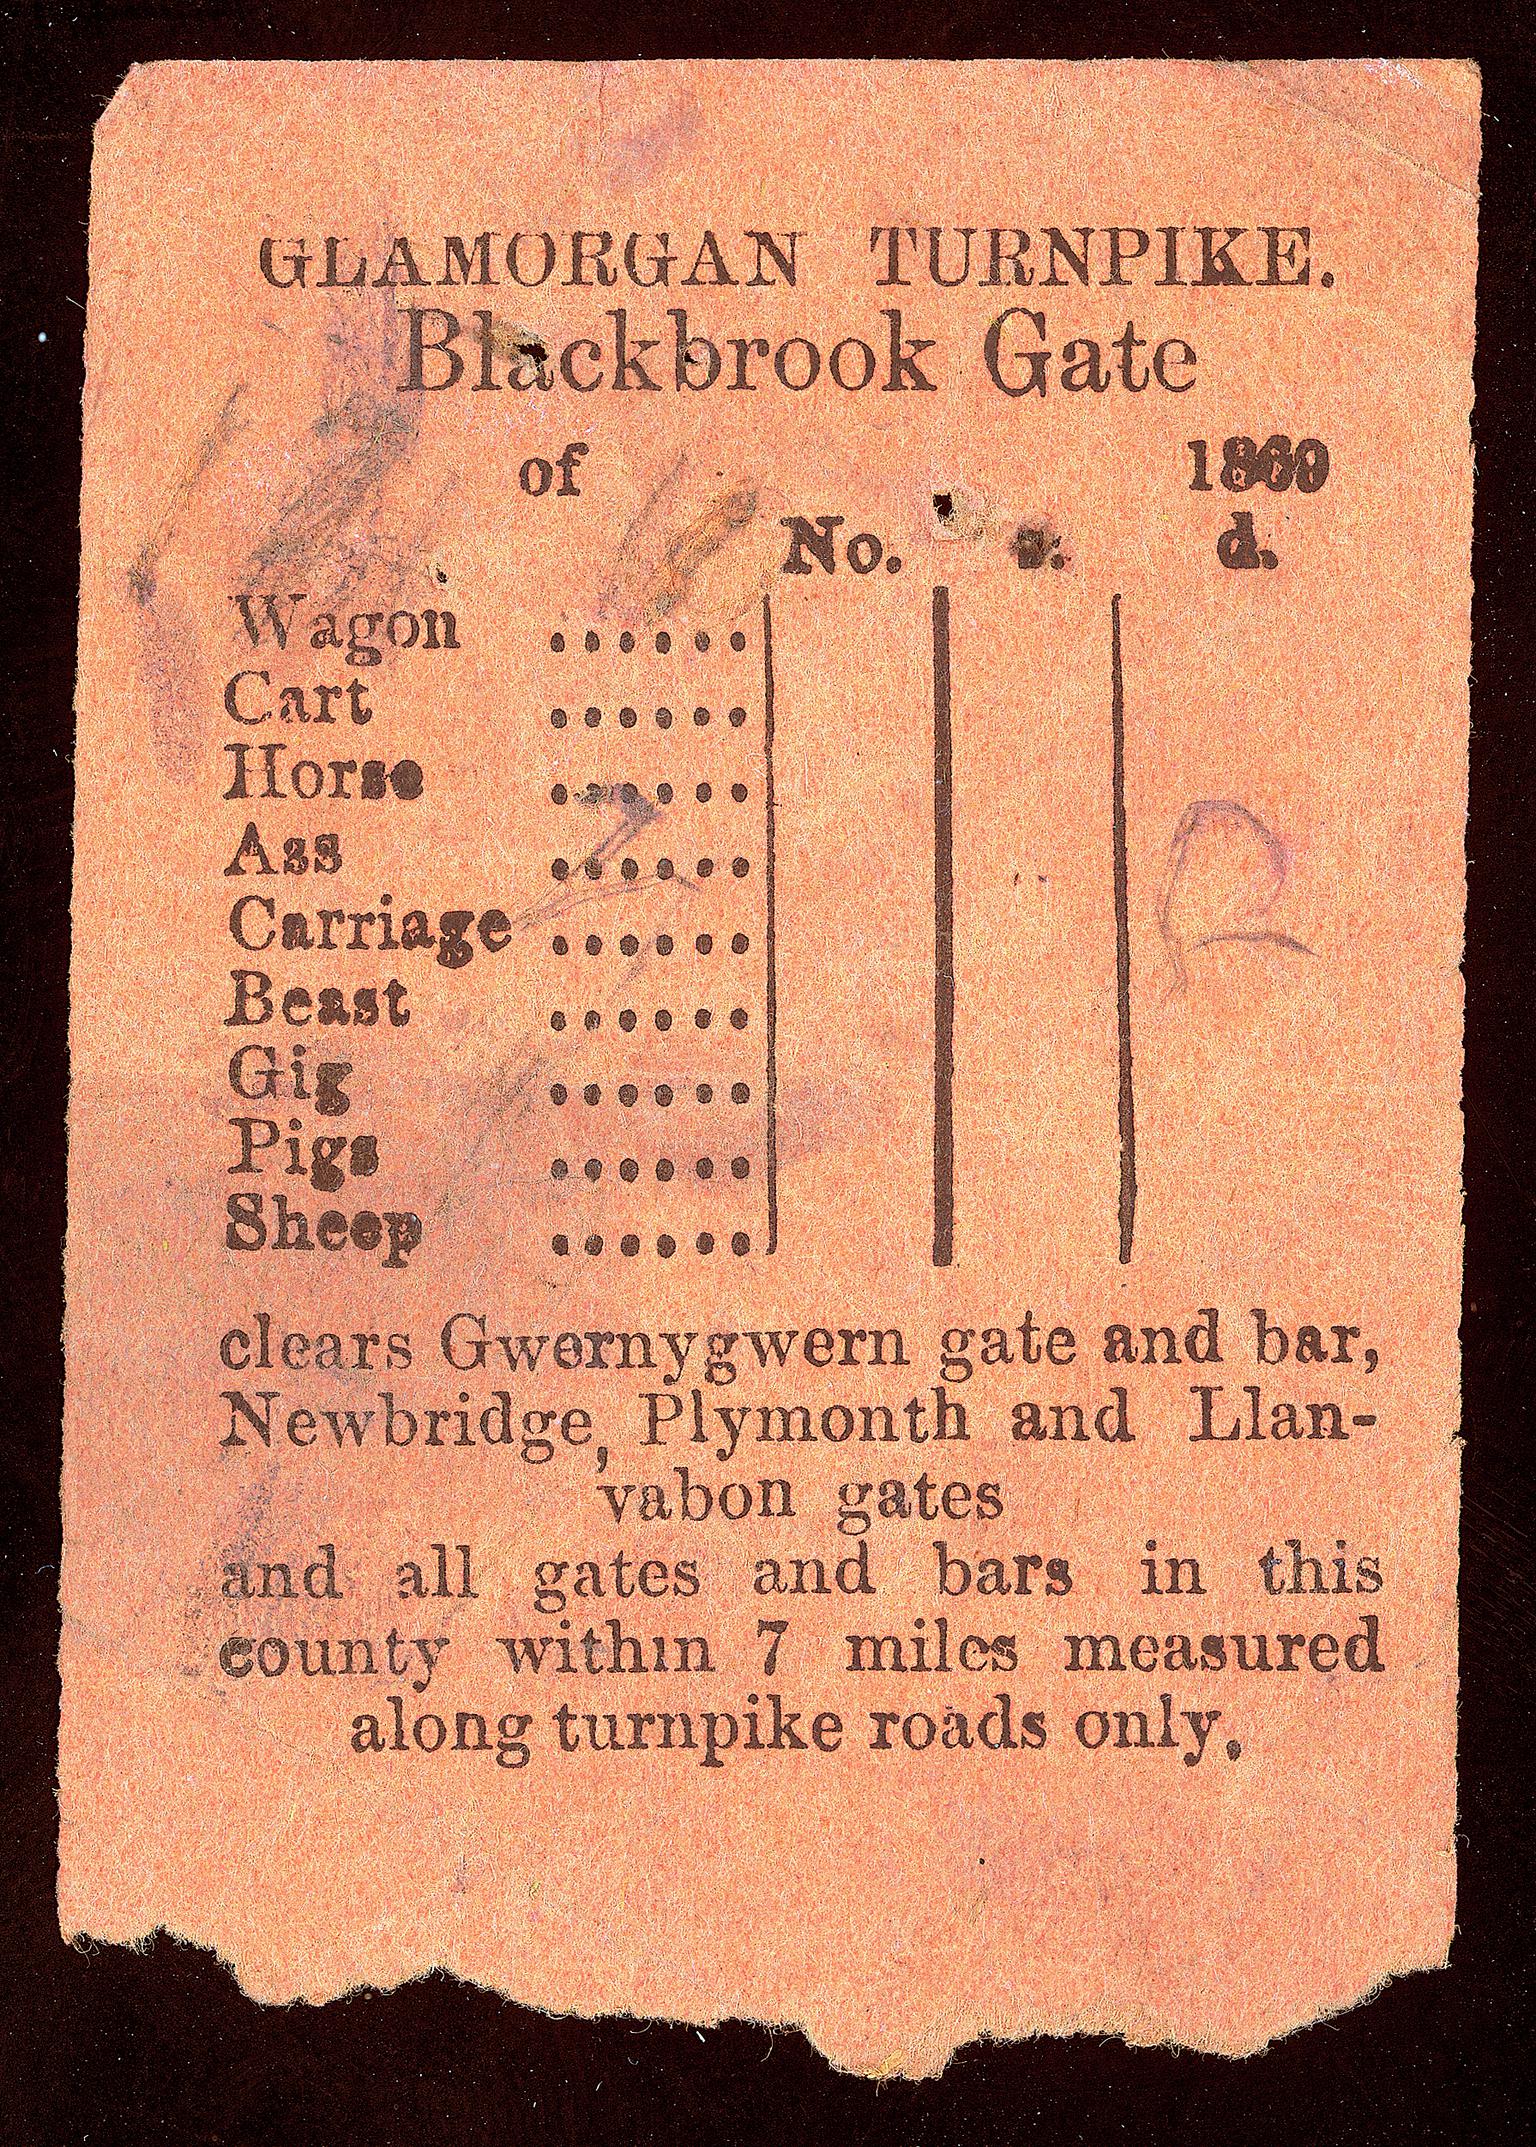 Glamorgan Turnpike, Blackbrook Gate, ticket